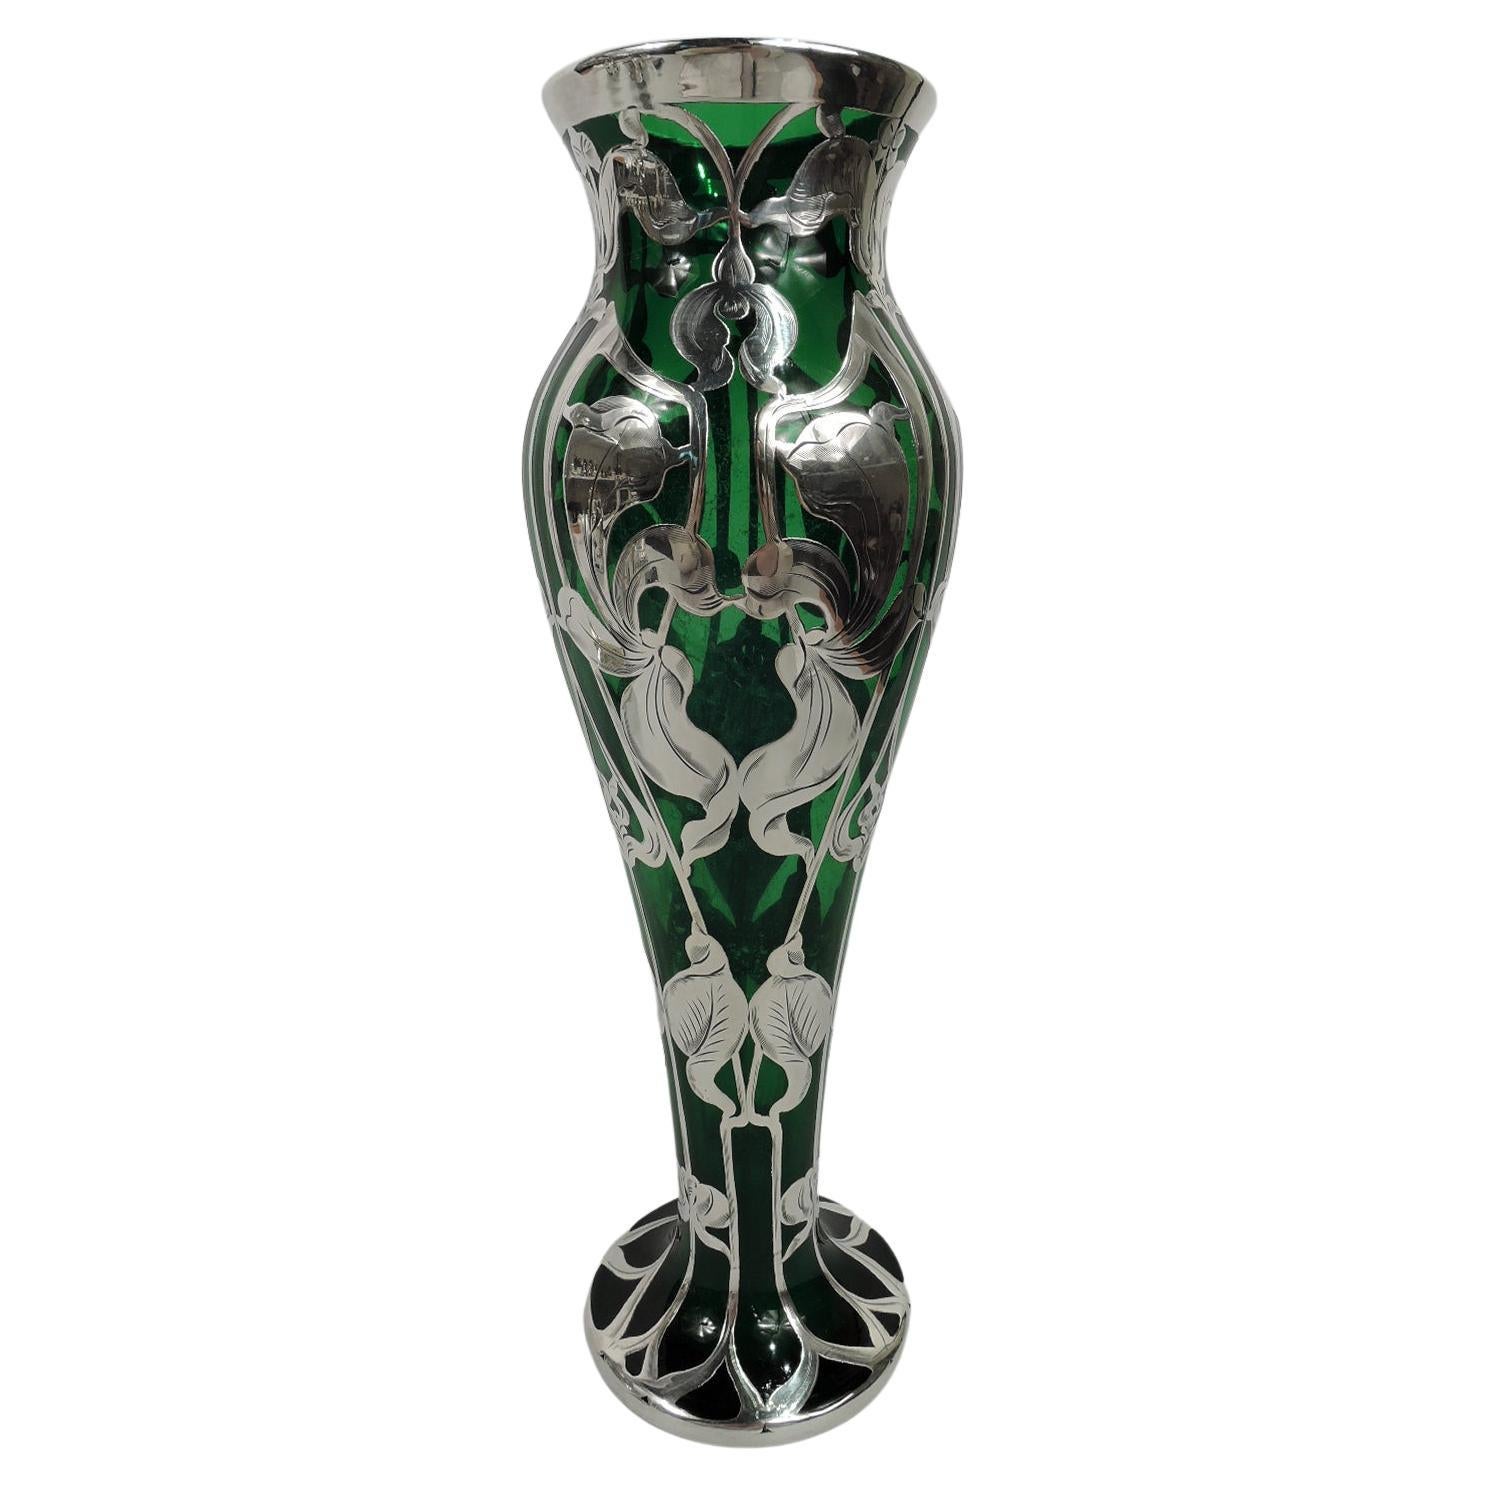 Antique American Art Nouveau Green Silver Overlay Vase